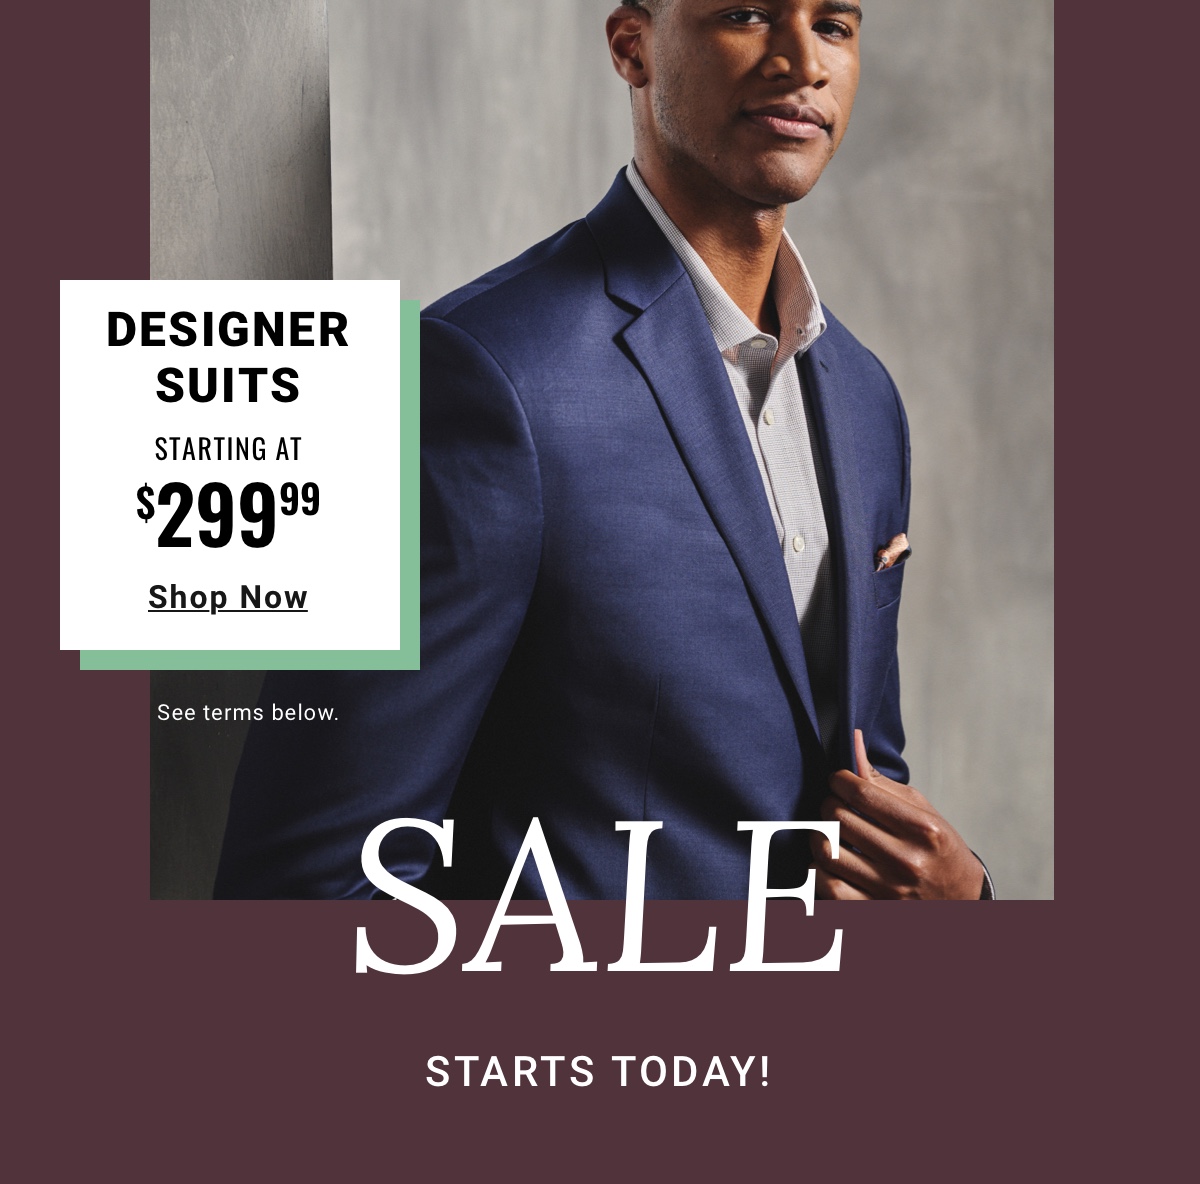 Designer Suits|Starting at $299.99